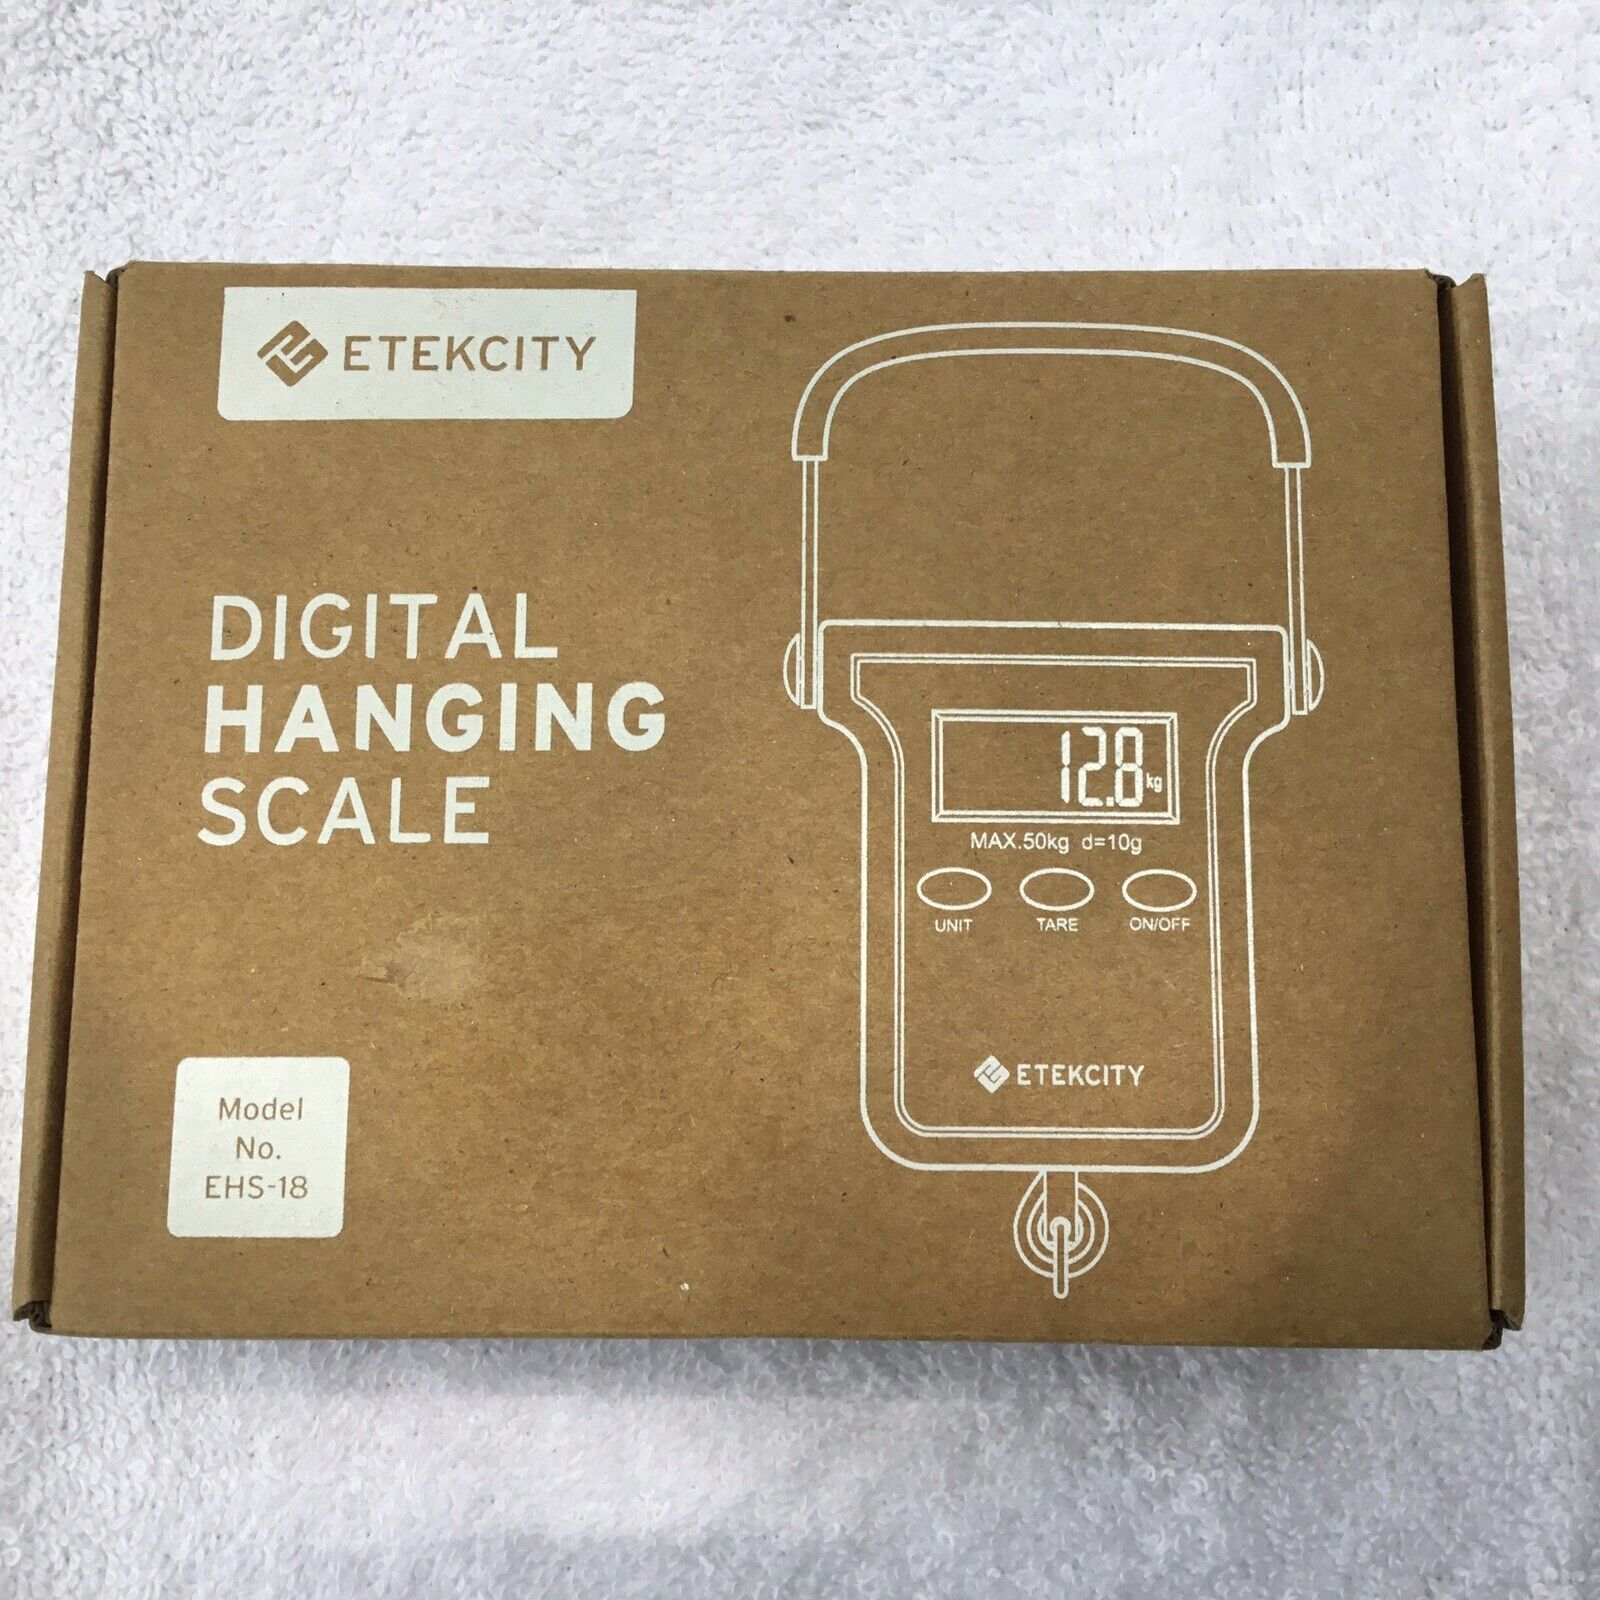 Etekcity Digital Hanging Luggage Scale Model Number Ehs-18. 110 Lb Capacity